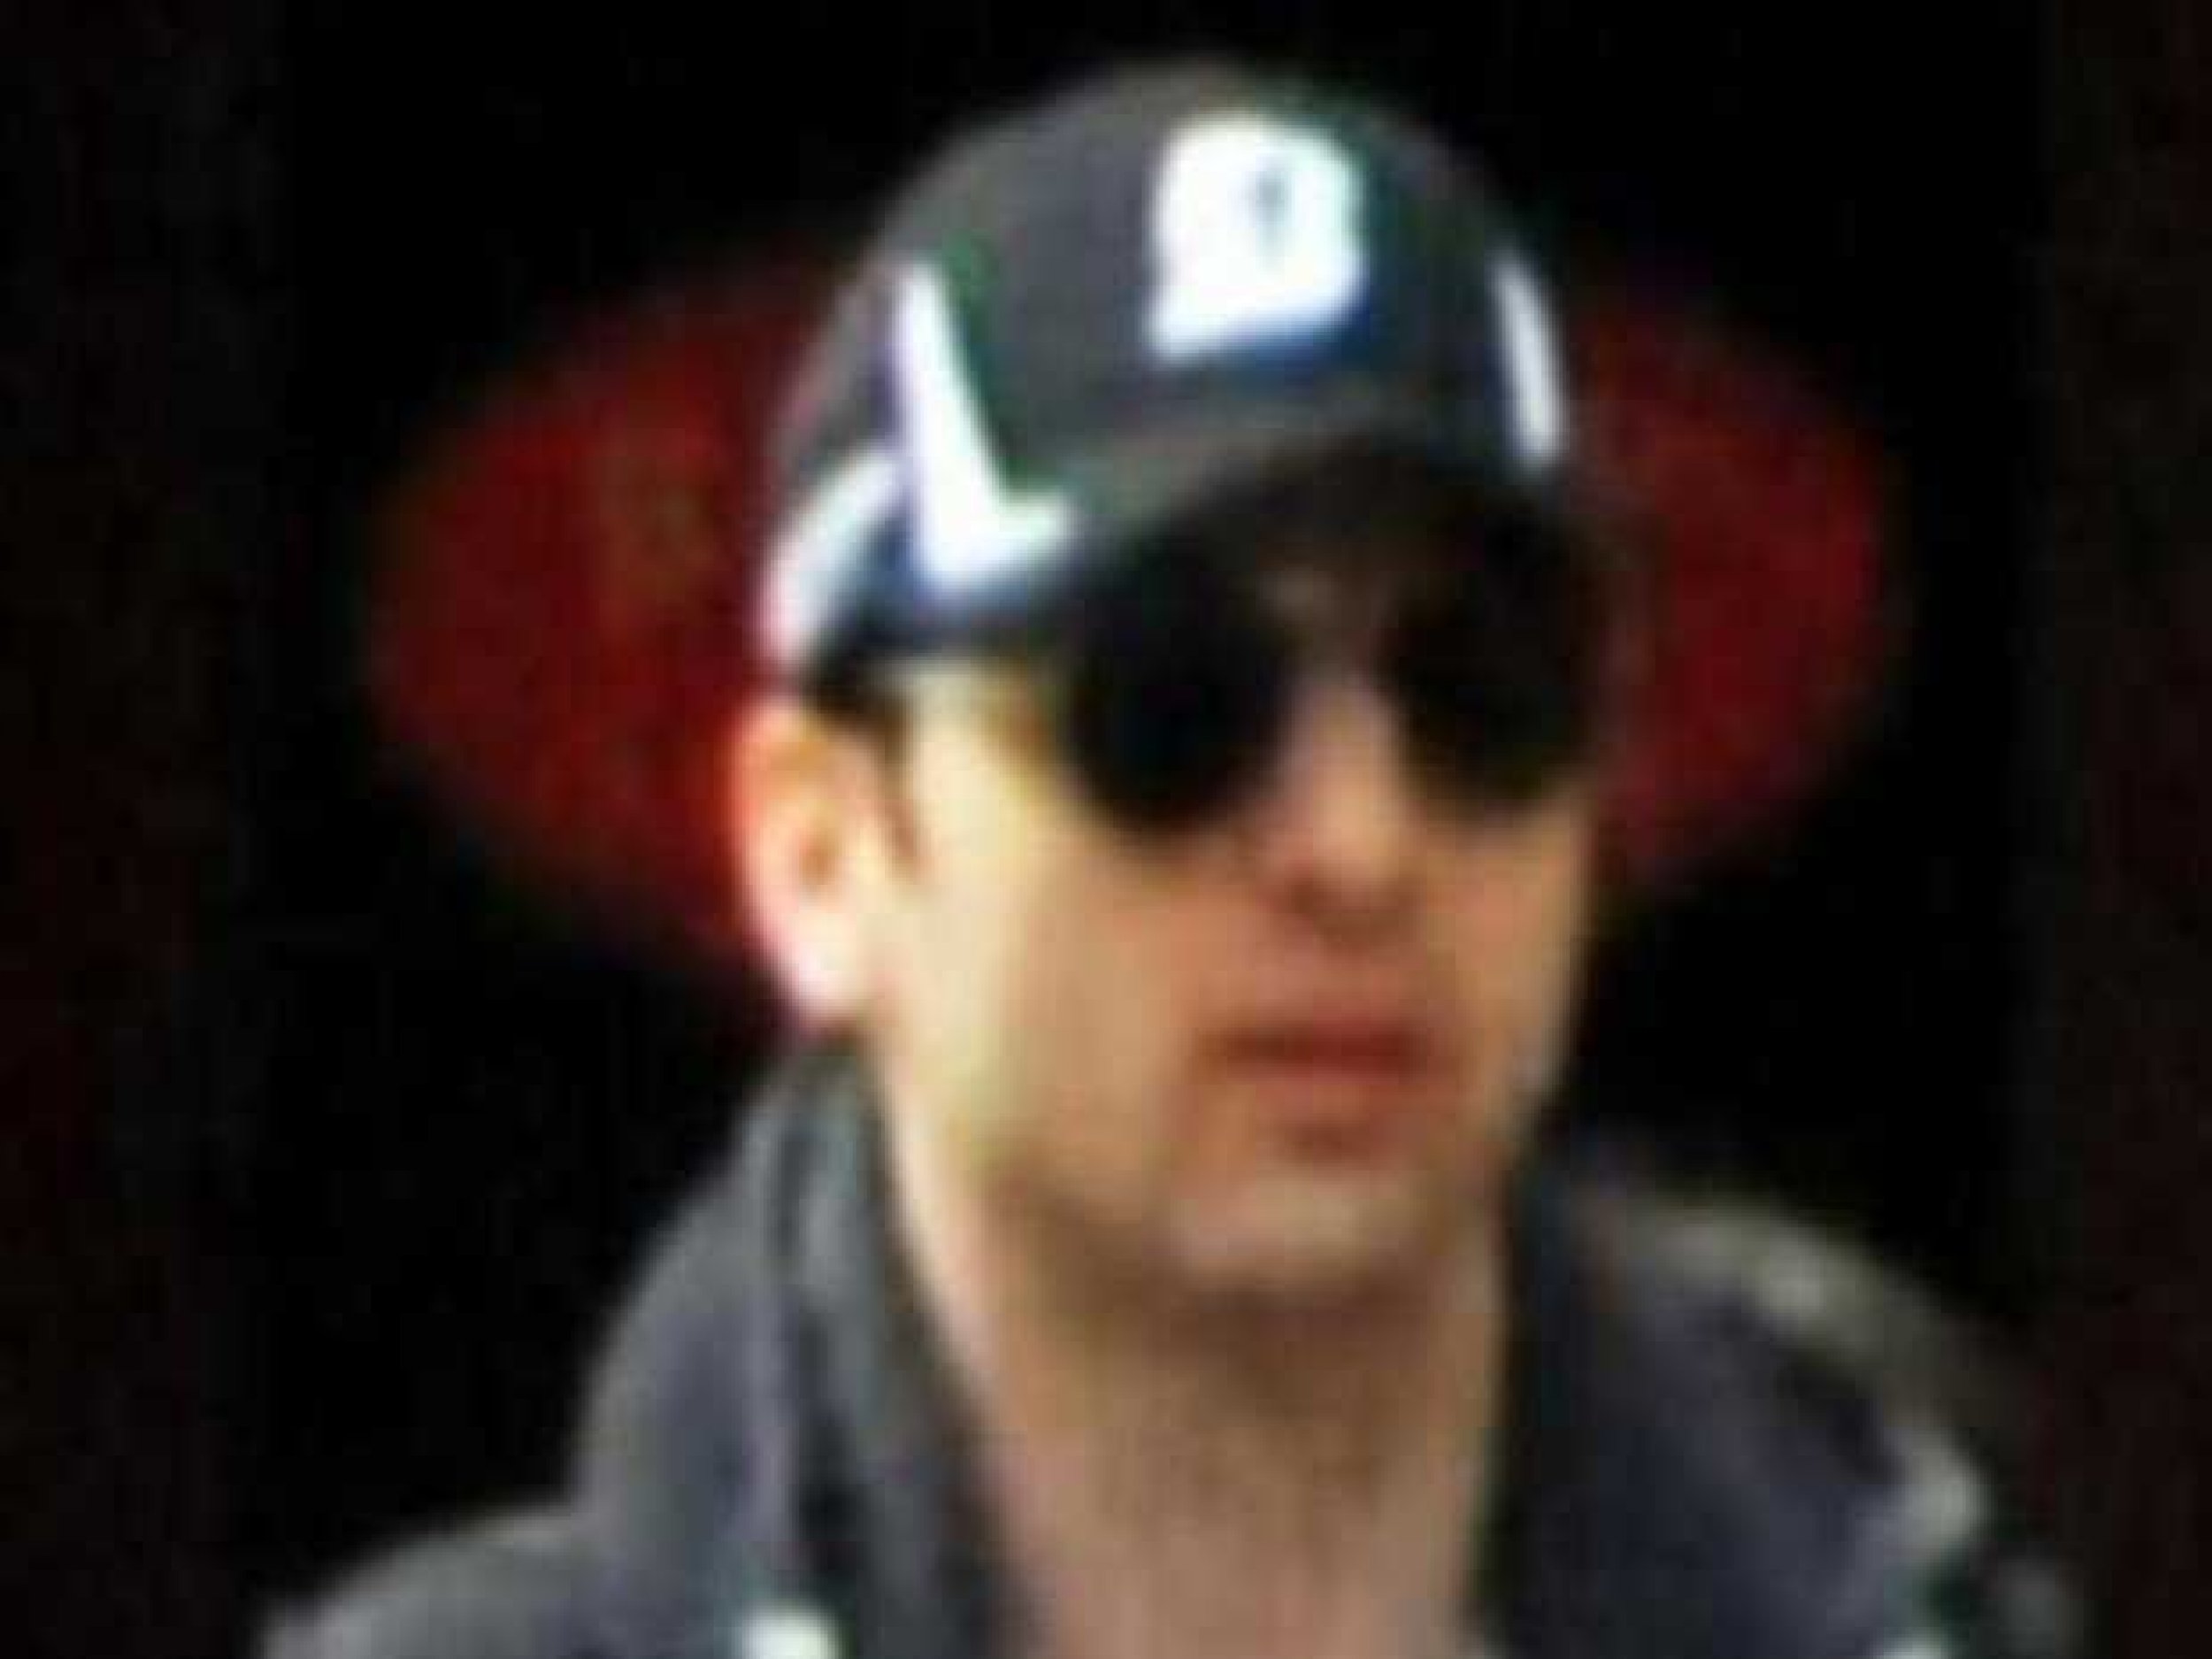 Tamerlan Tsarnaev Death Photo Surfaces Autopsy Picture On Reddit Of Slain Boston Bombing